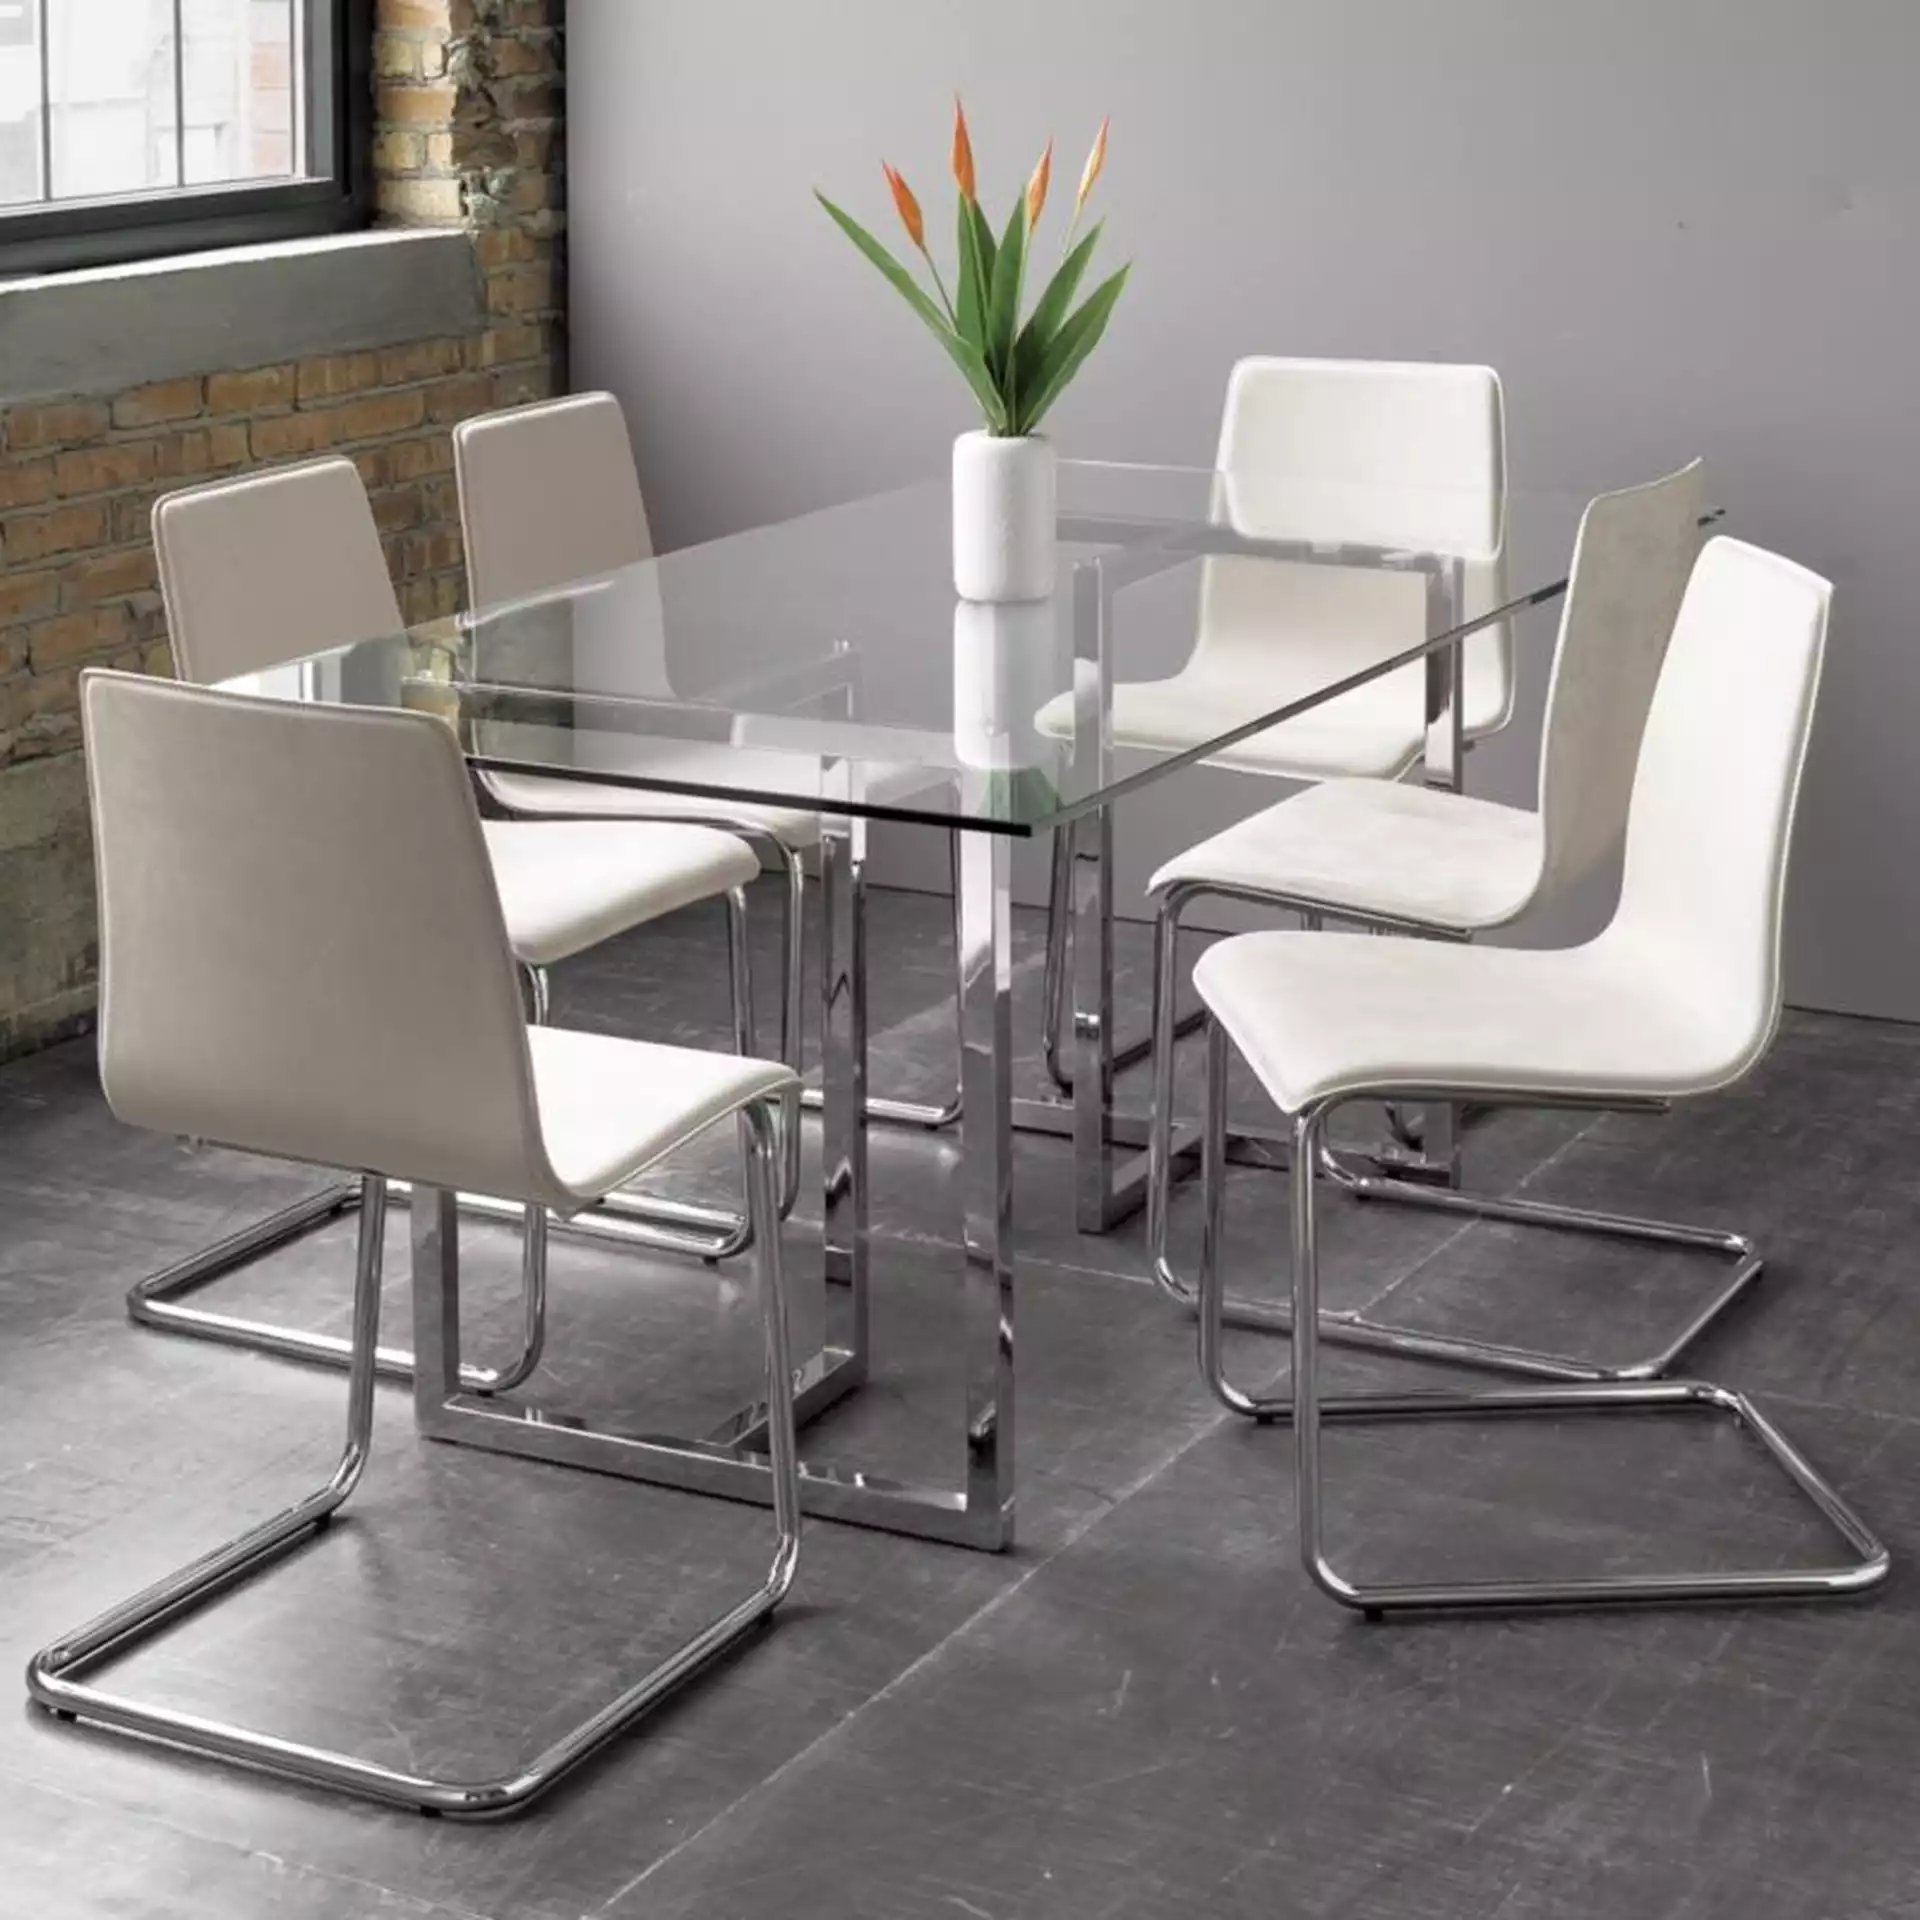 "silverado chrome 72"" rectangular dining table"